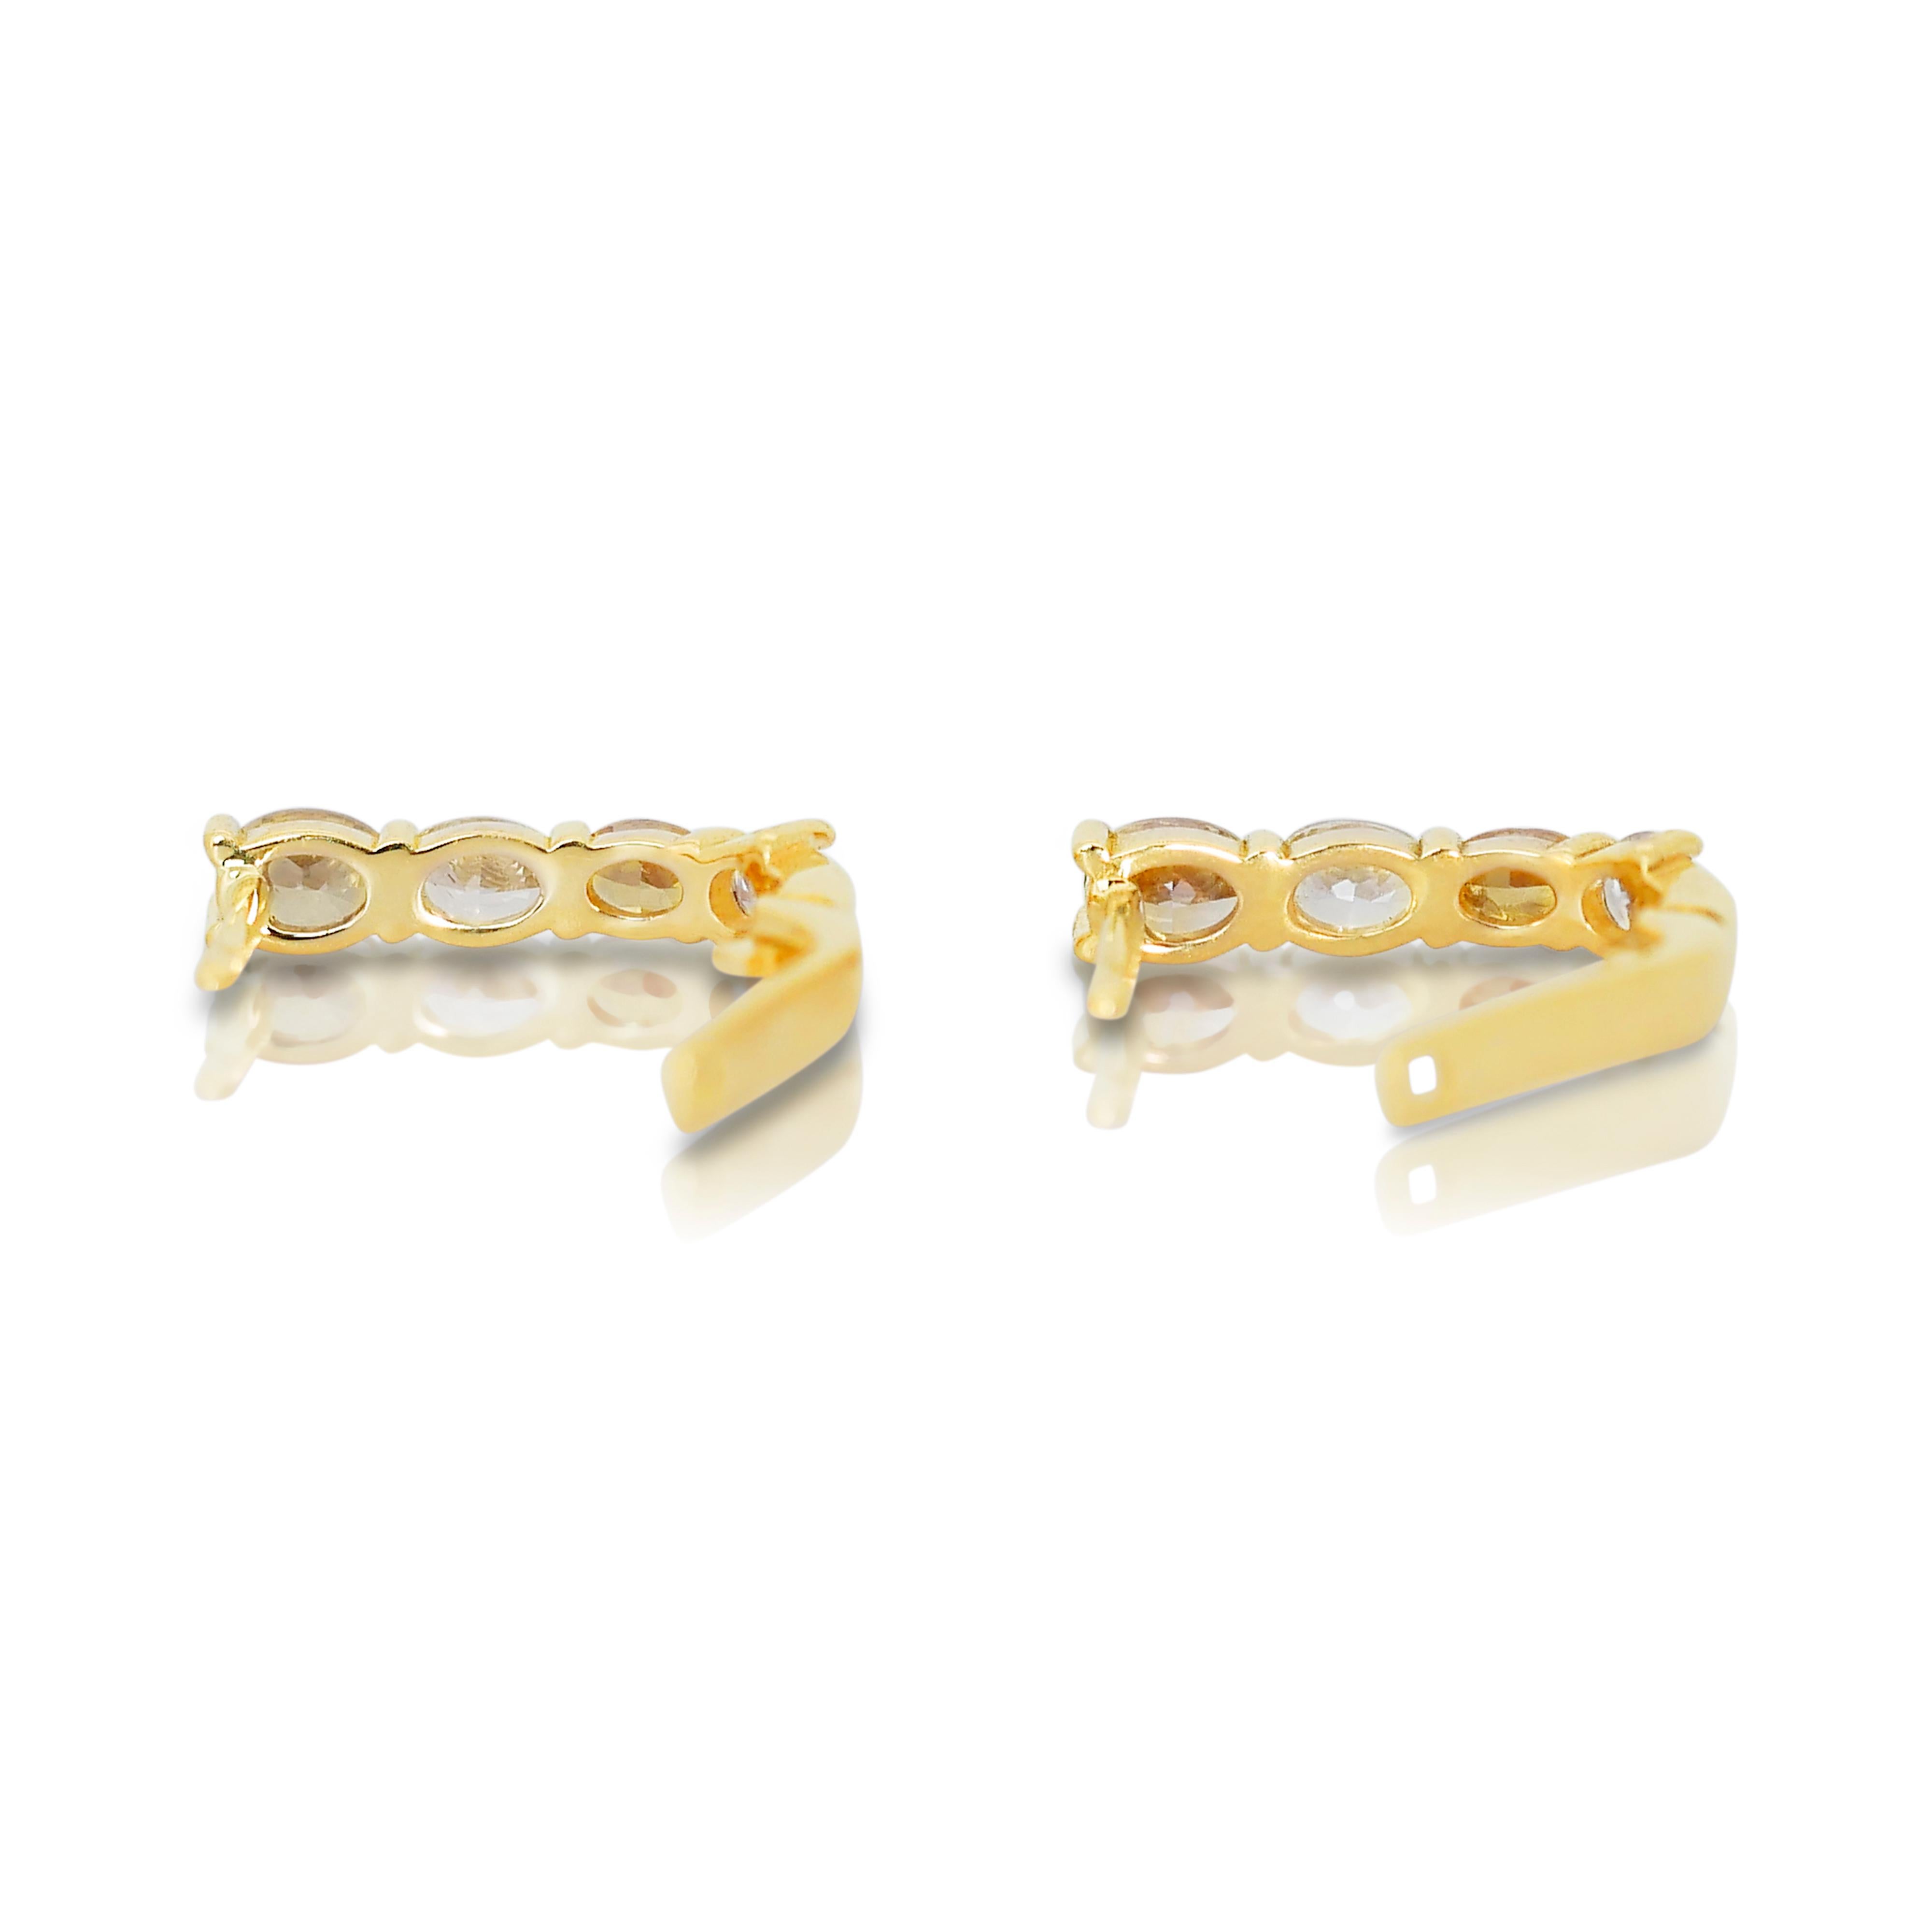 Radiant 1.44 ct Fancy Colored Diamond Earrings in 18k Yellow Gold - IGI  For Sale 2